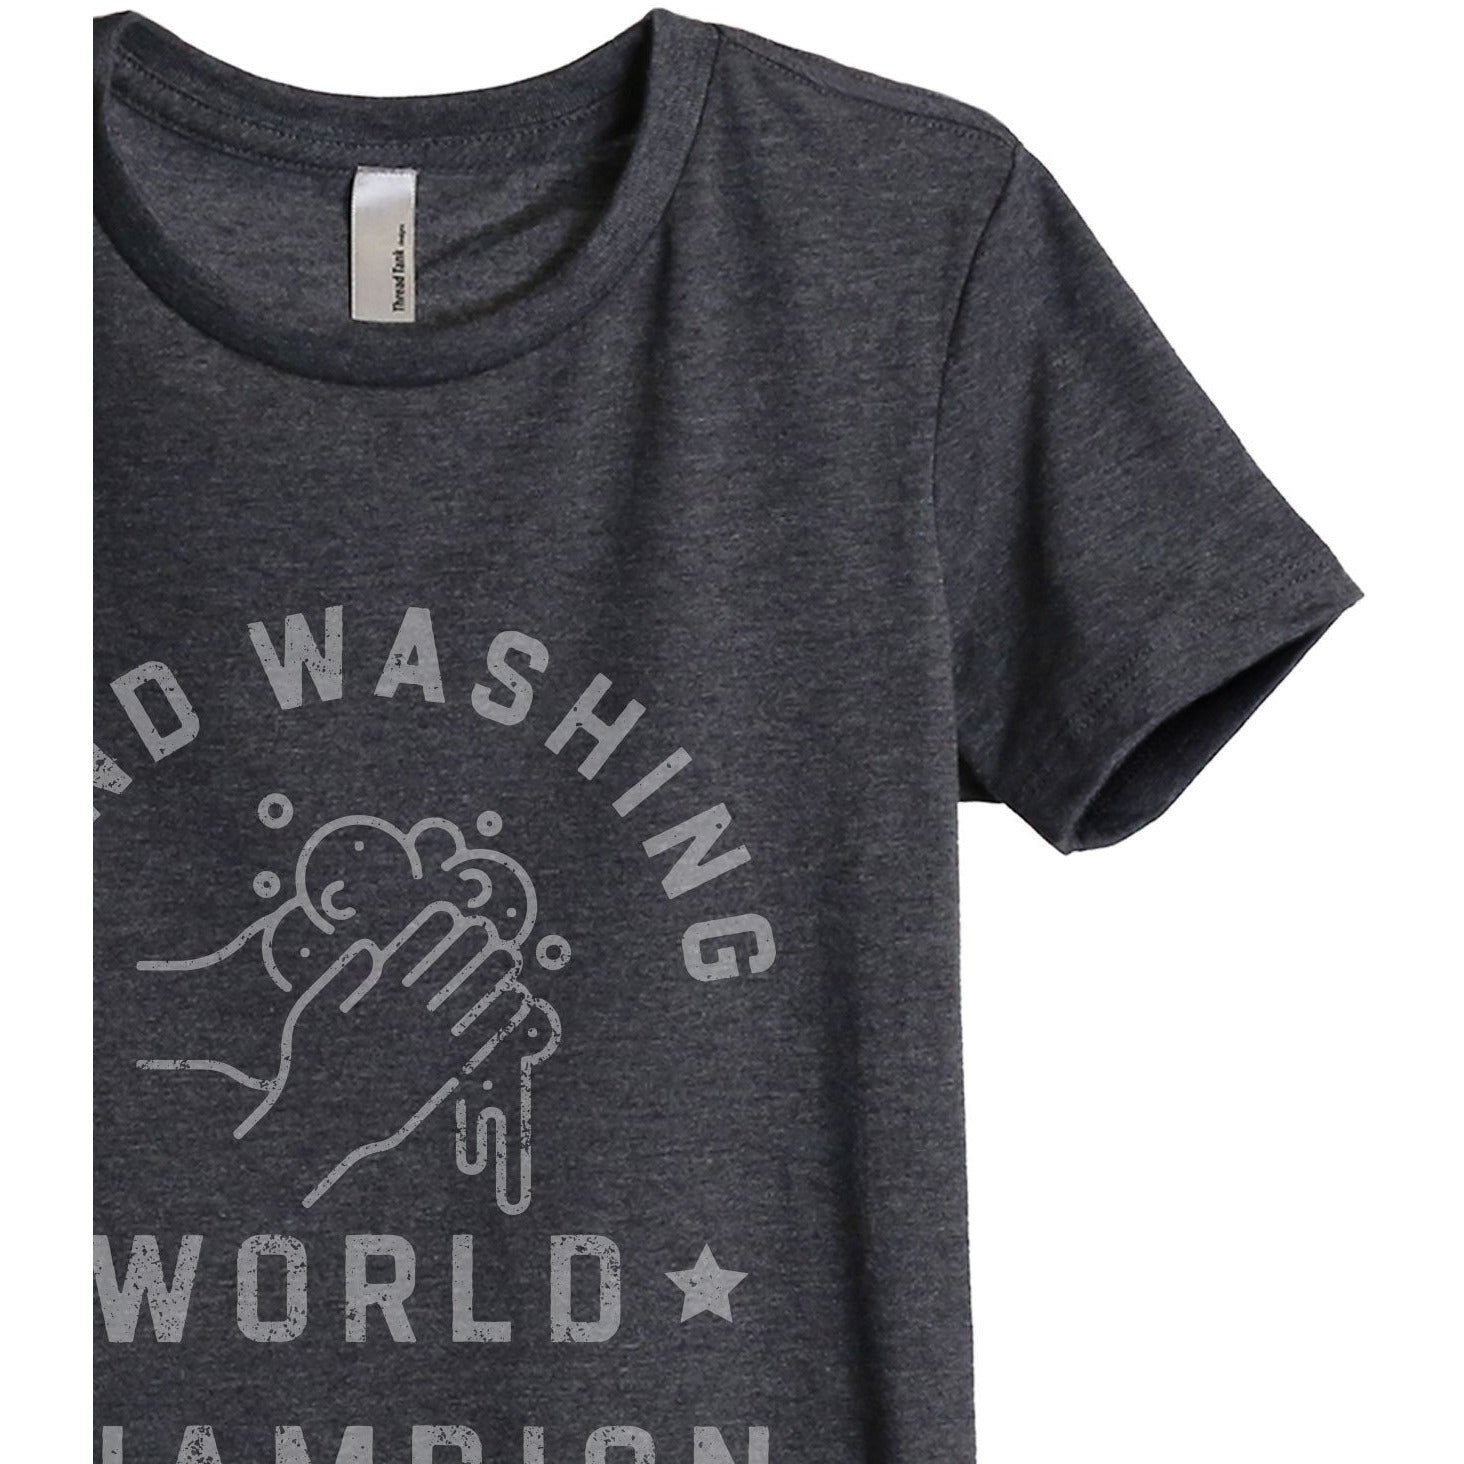 Hand Washing World Champion Women's Relaxed Crewneck T-Shirt Top Tee Charcoal Grey
